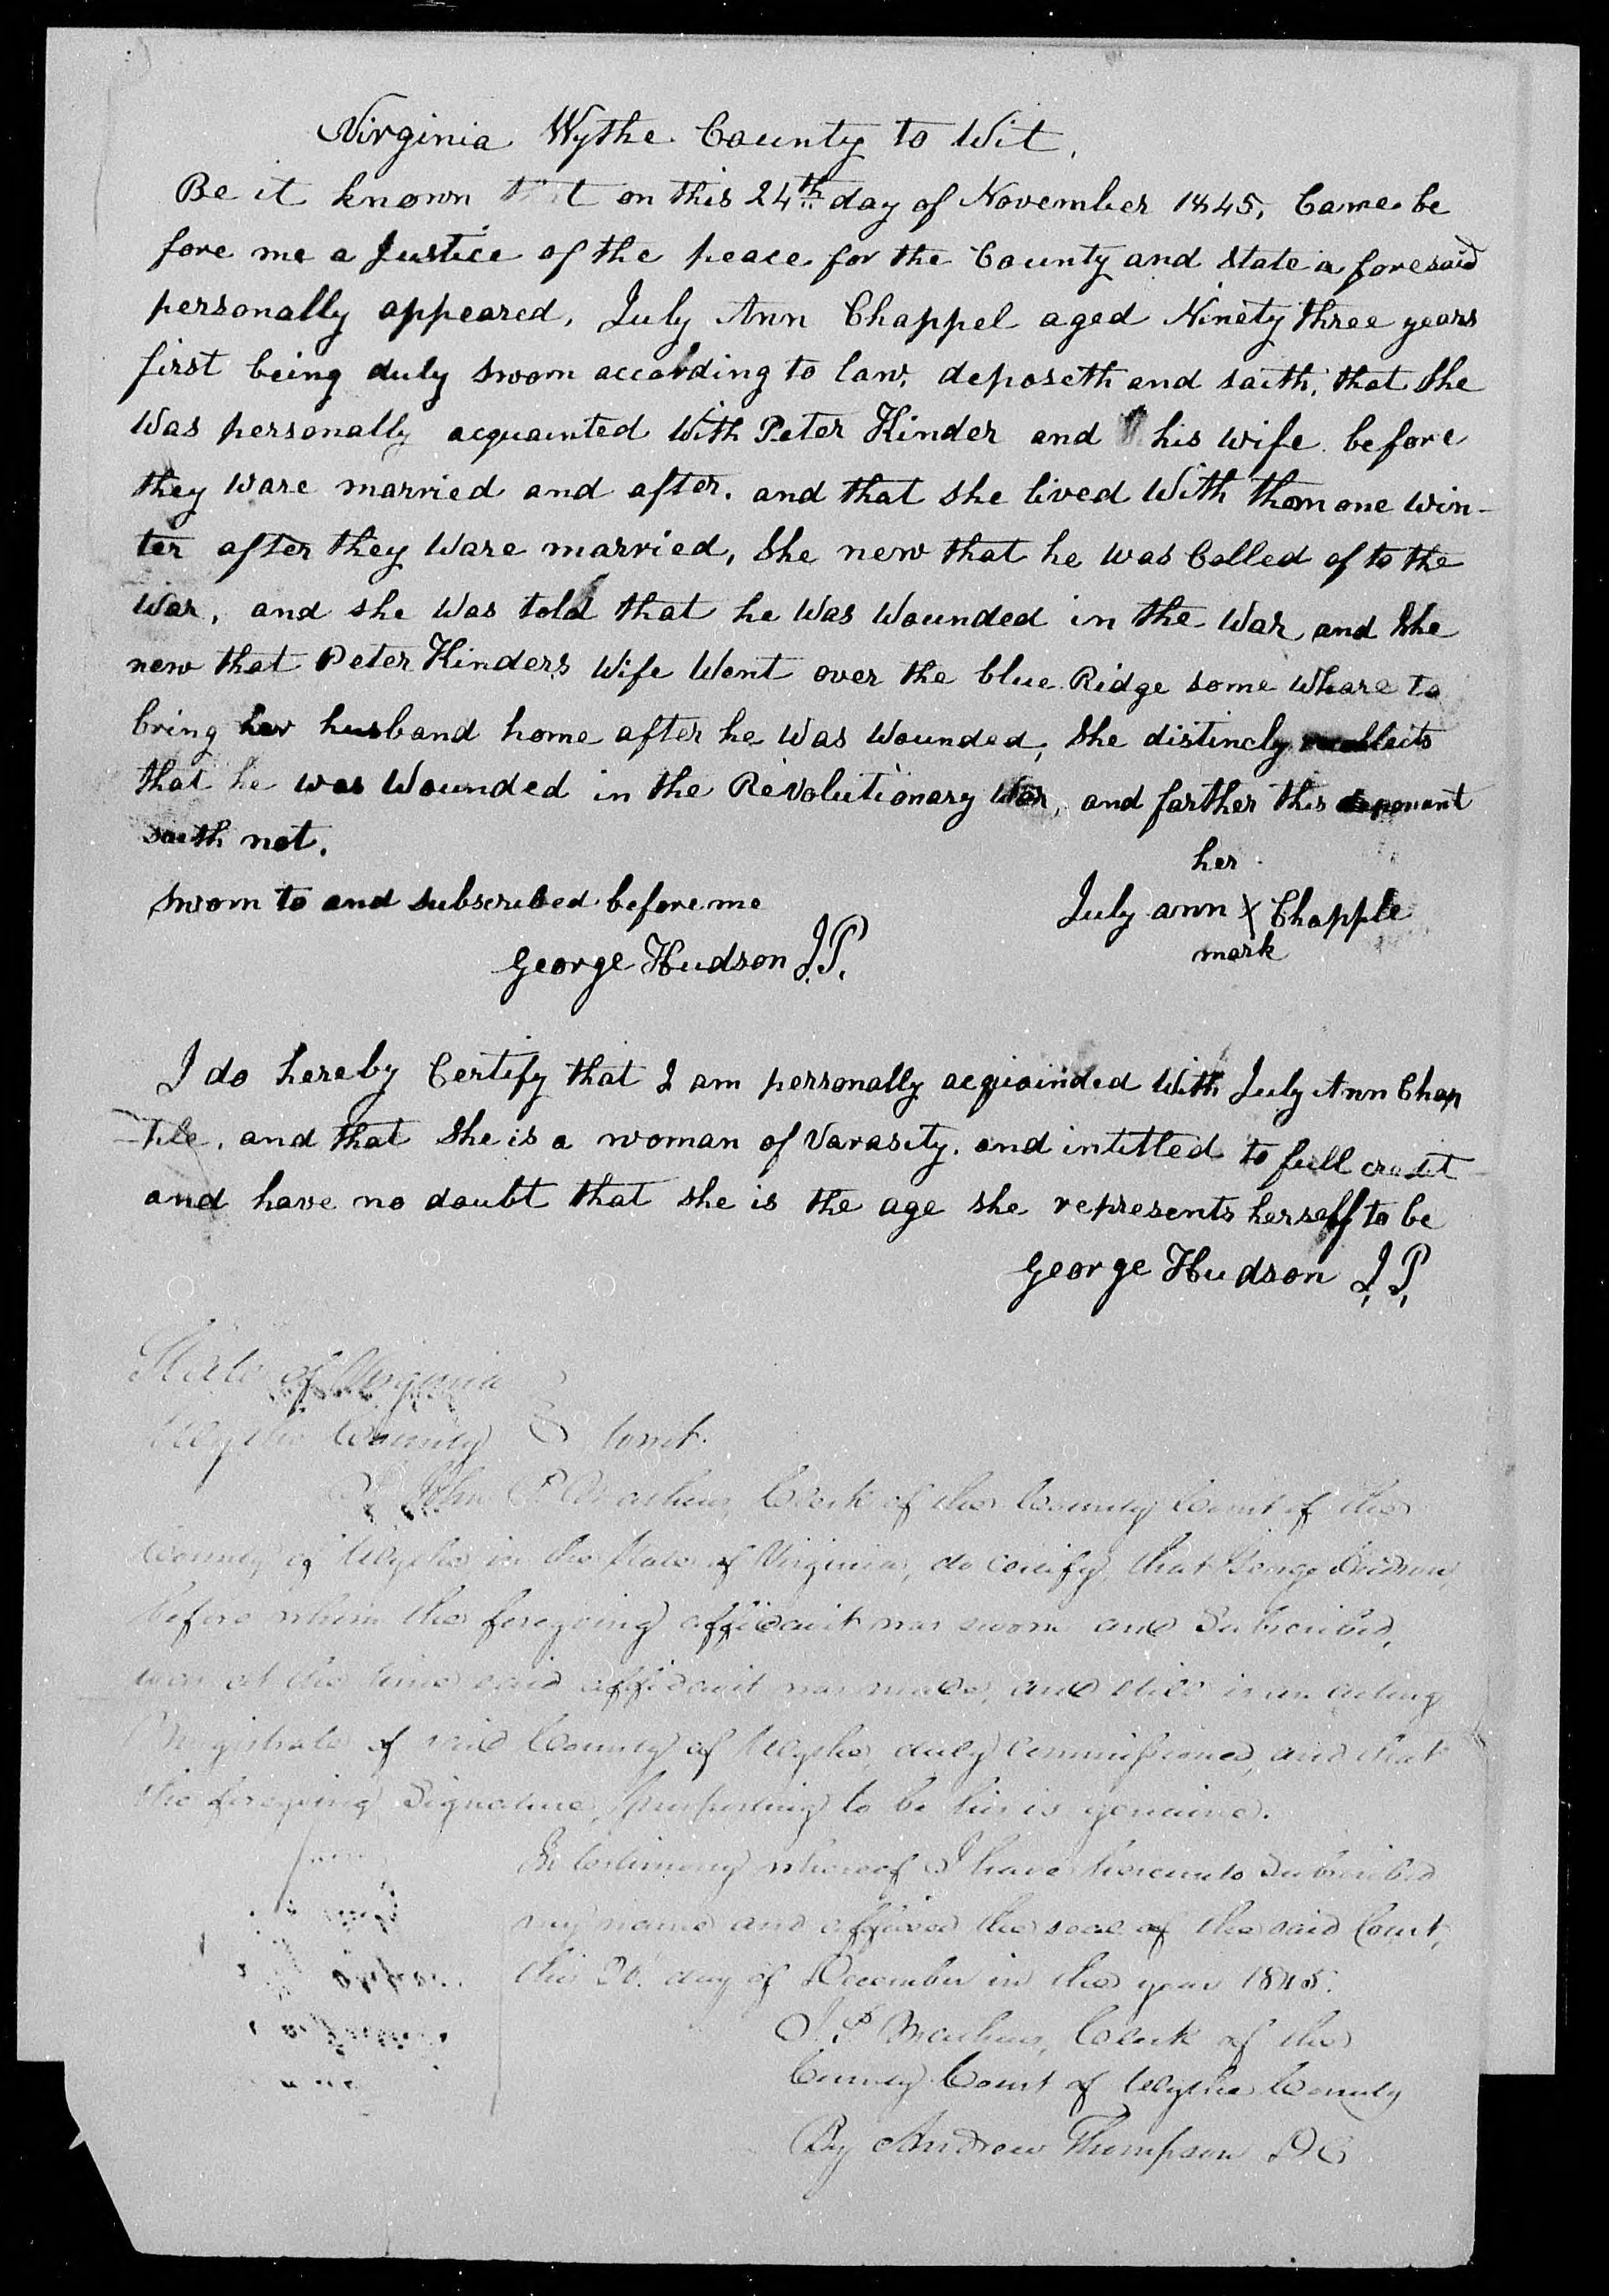 Affidavit of July Ann Chappel in support of a Pension Claim for Peter and Margaret Kinder, 24 November 1845